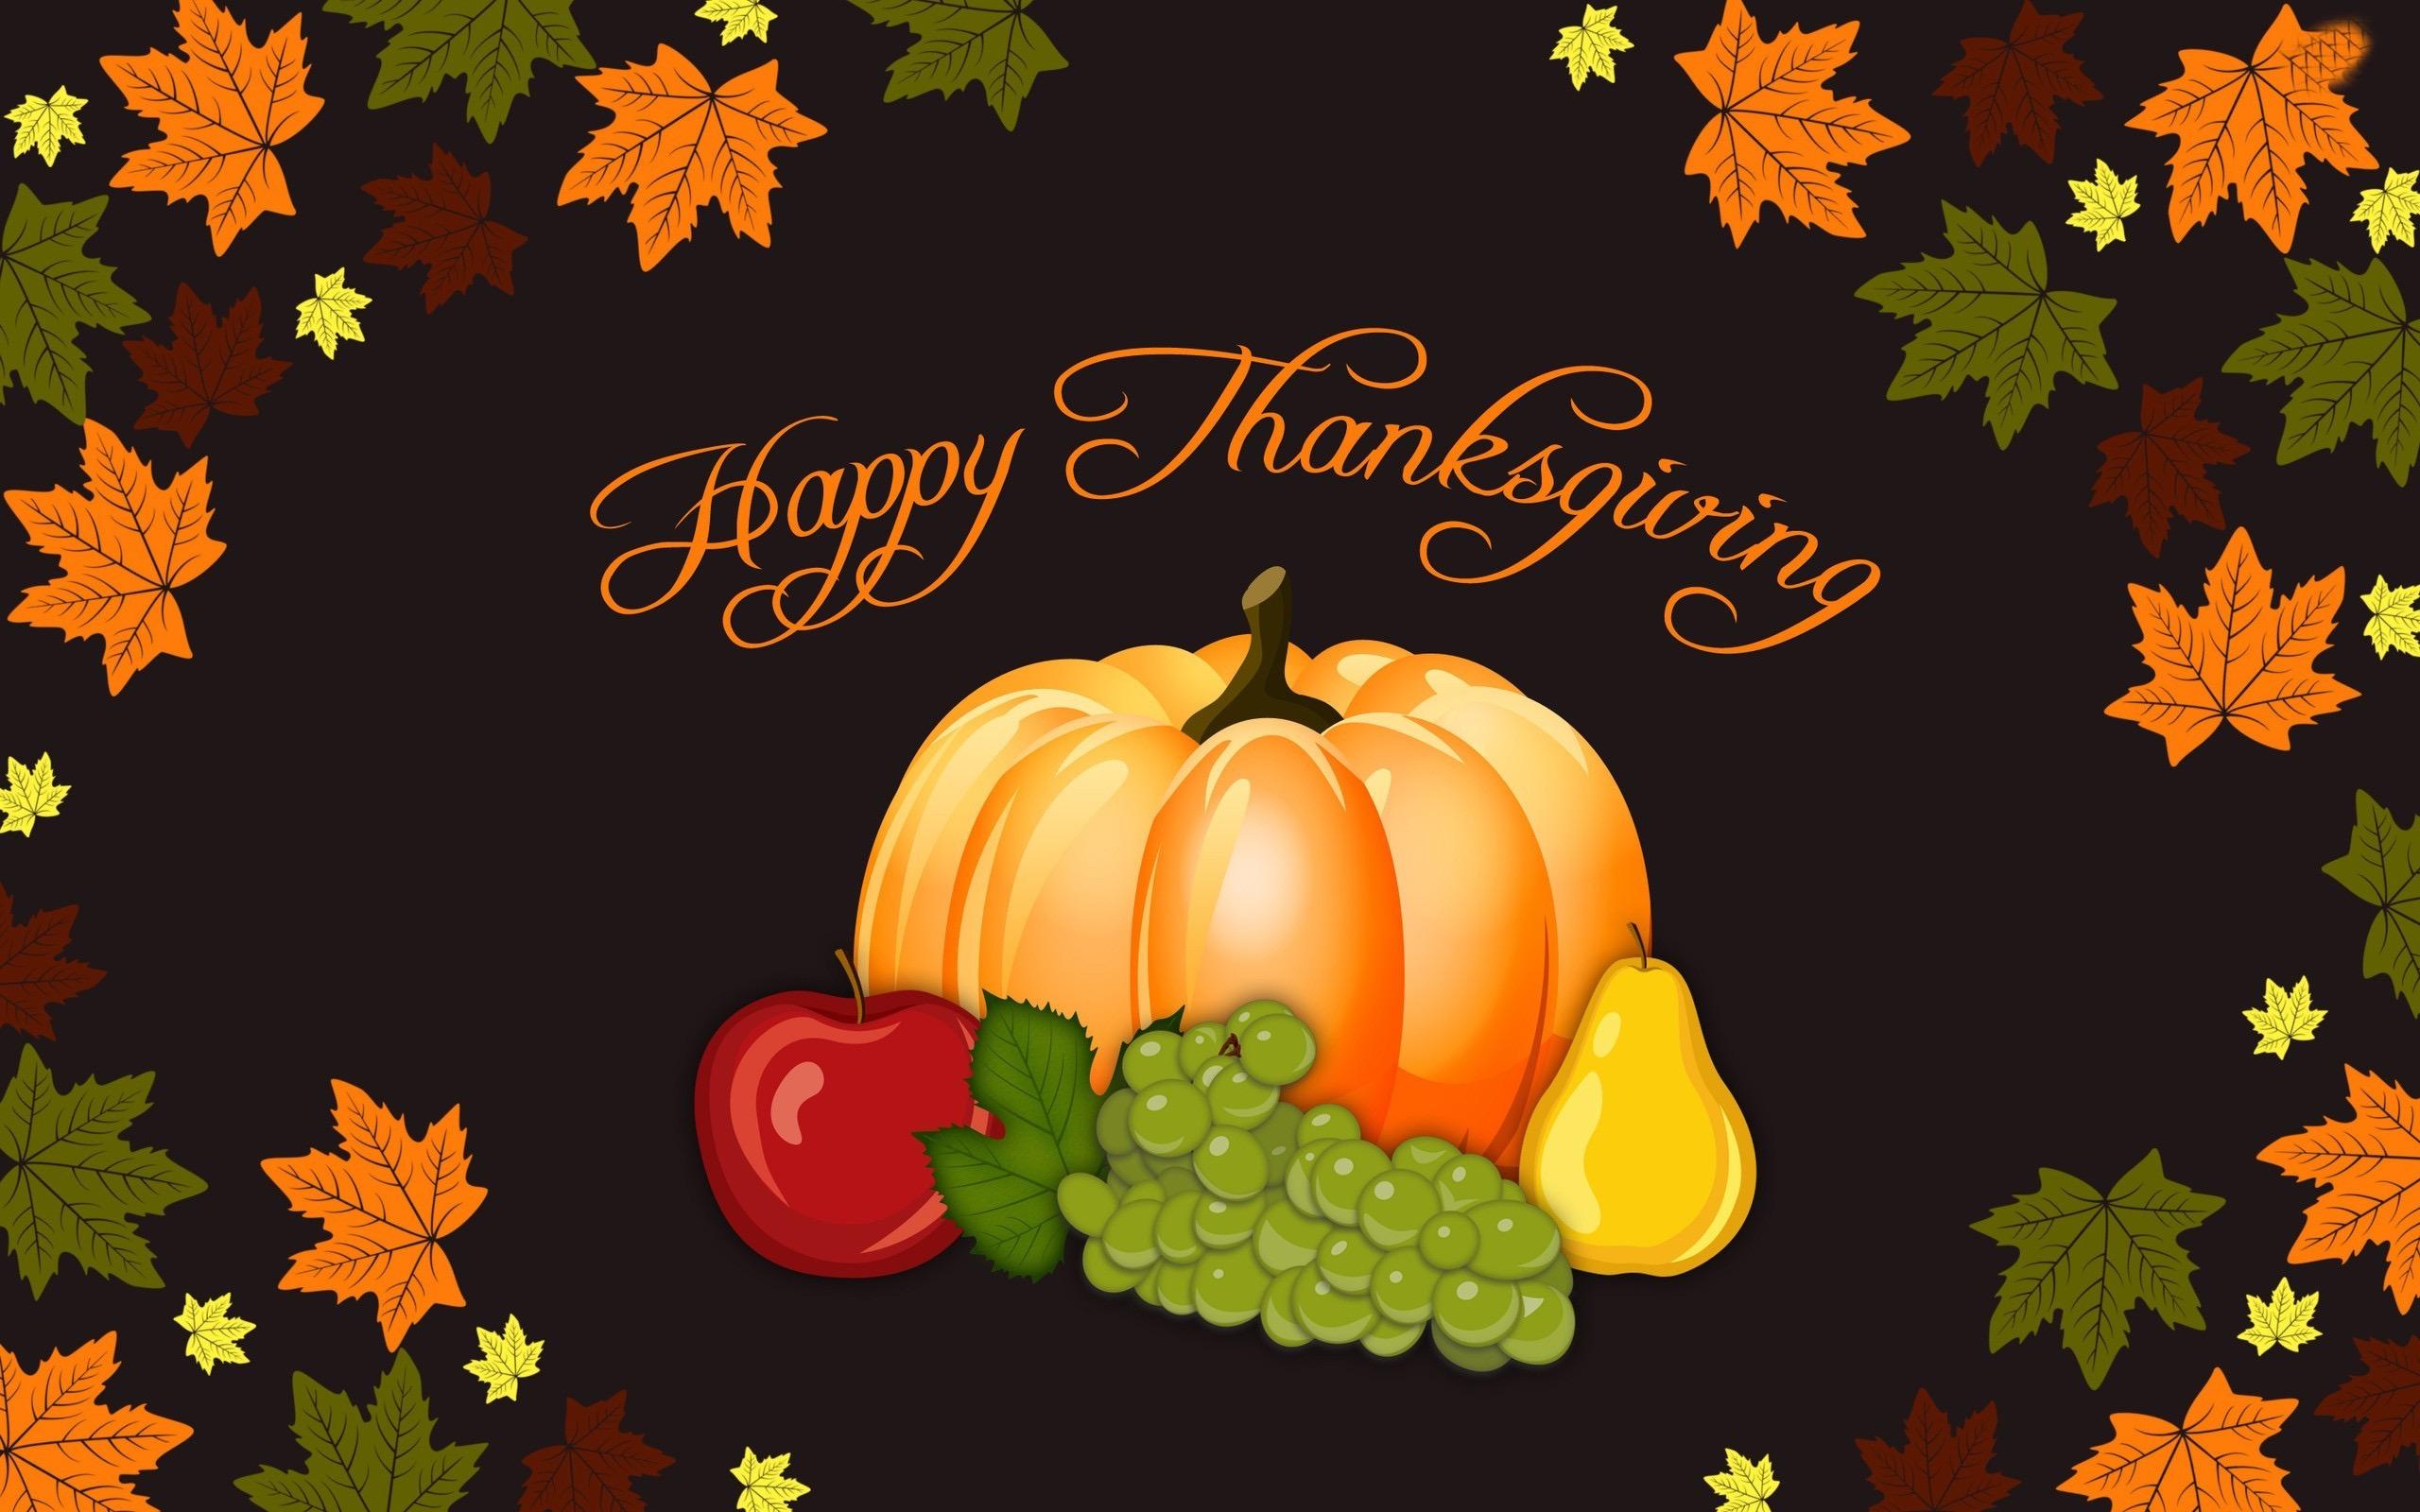 Happy Thanksgiving Wallpaper Memorial Day Image